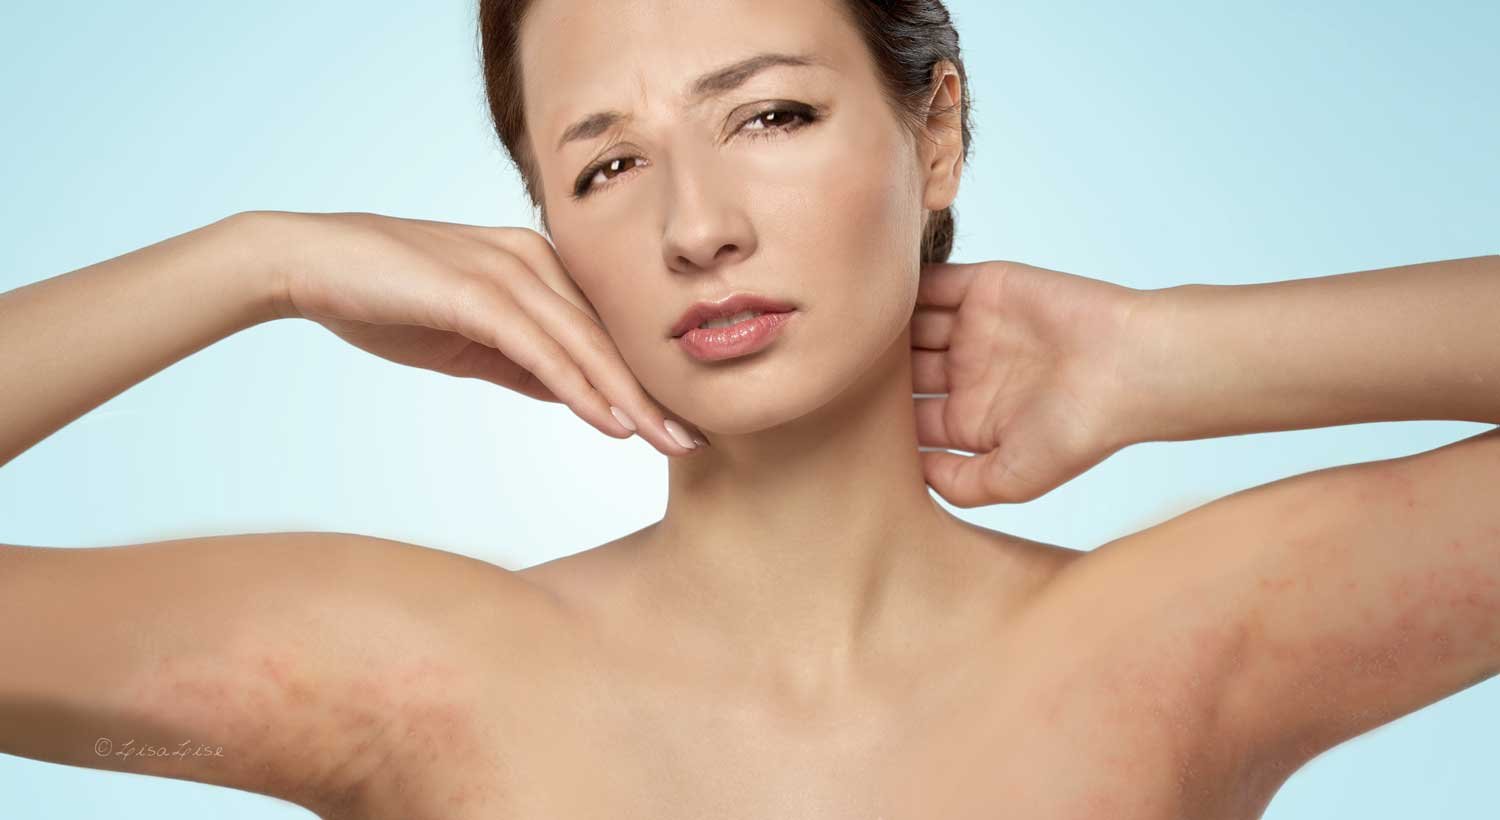 Lotion — LisaLise Blog — LisaLise Pure Natural Skincare